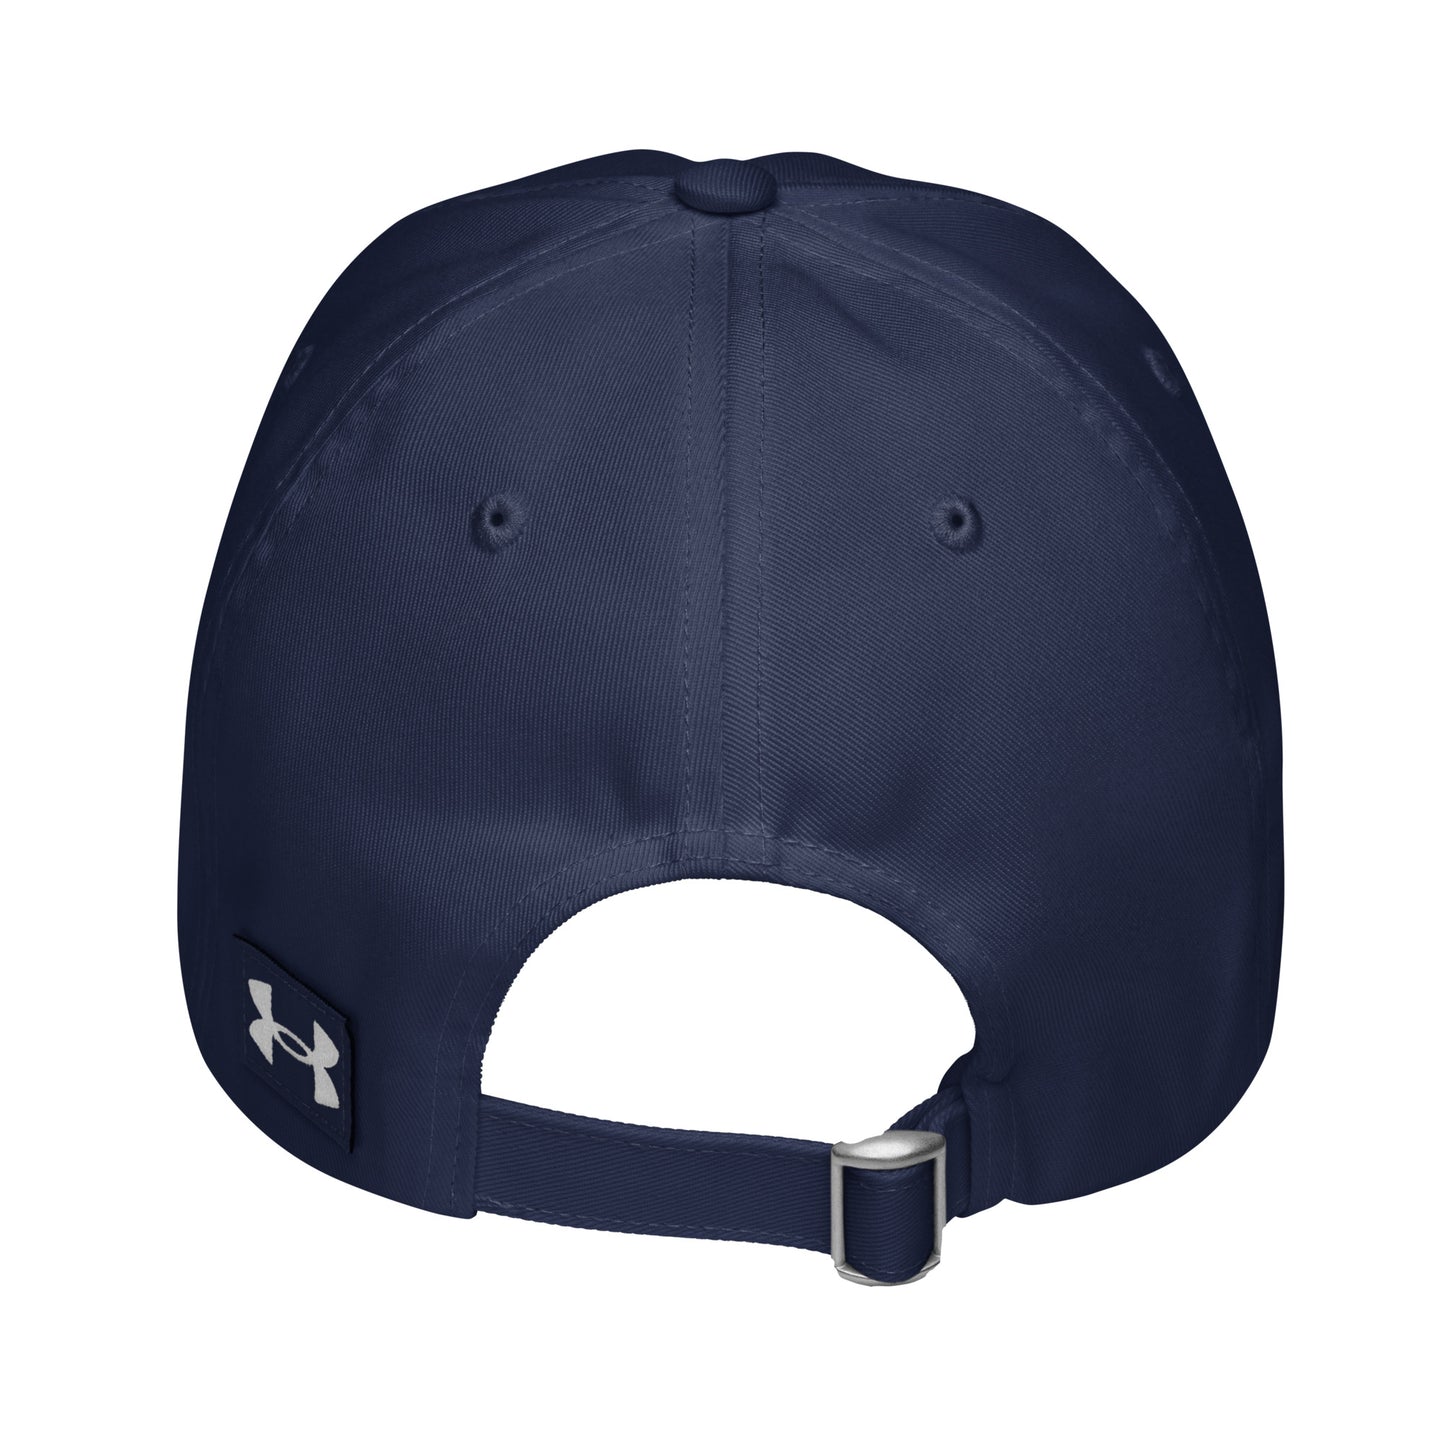 Old School Blue Baseball Cap - 78G Lifestyle Exclusive Design - Under Armor®